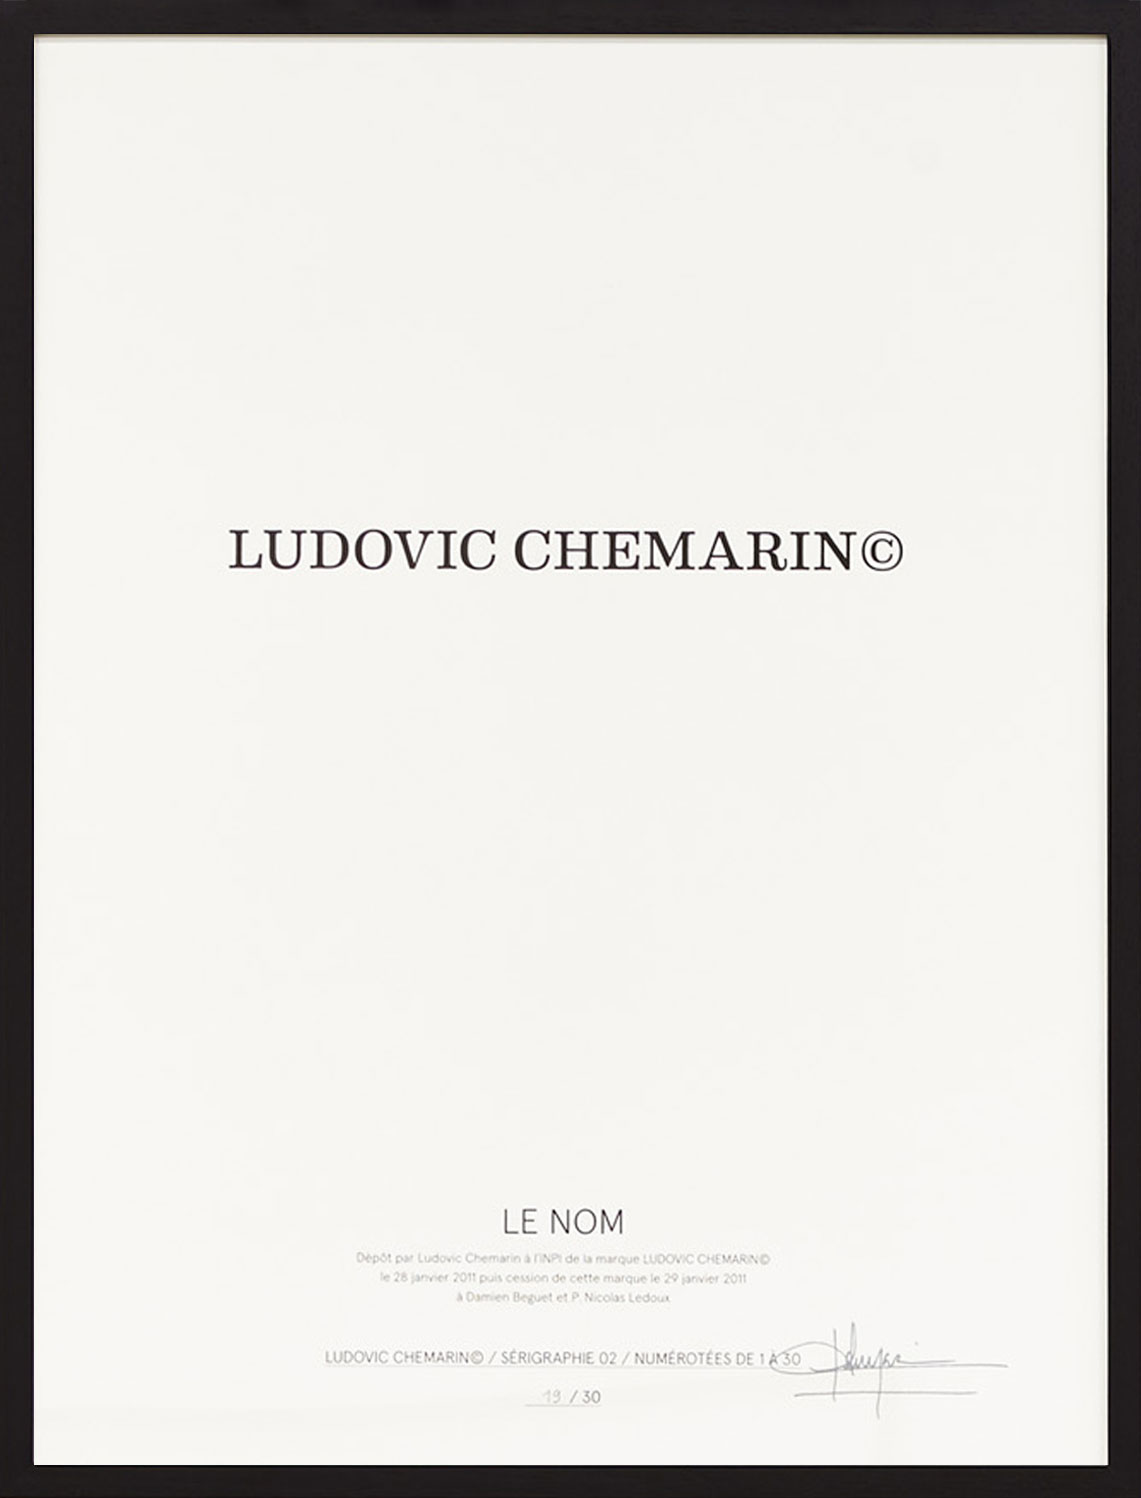 Ludovic Chemarin© - Le nom, 2015